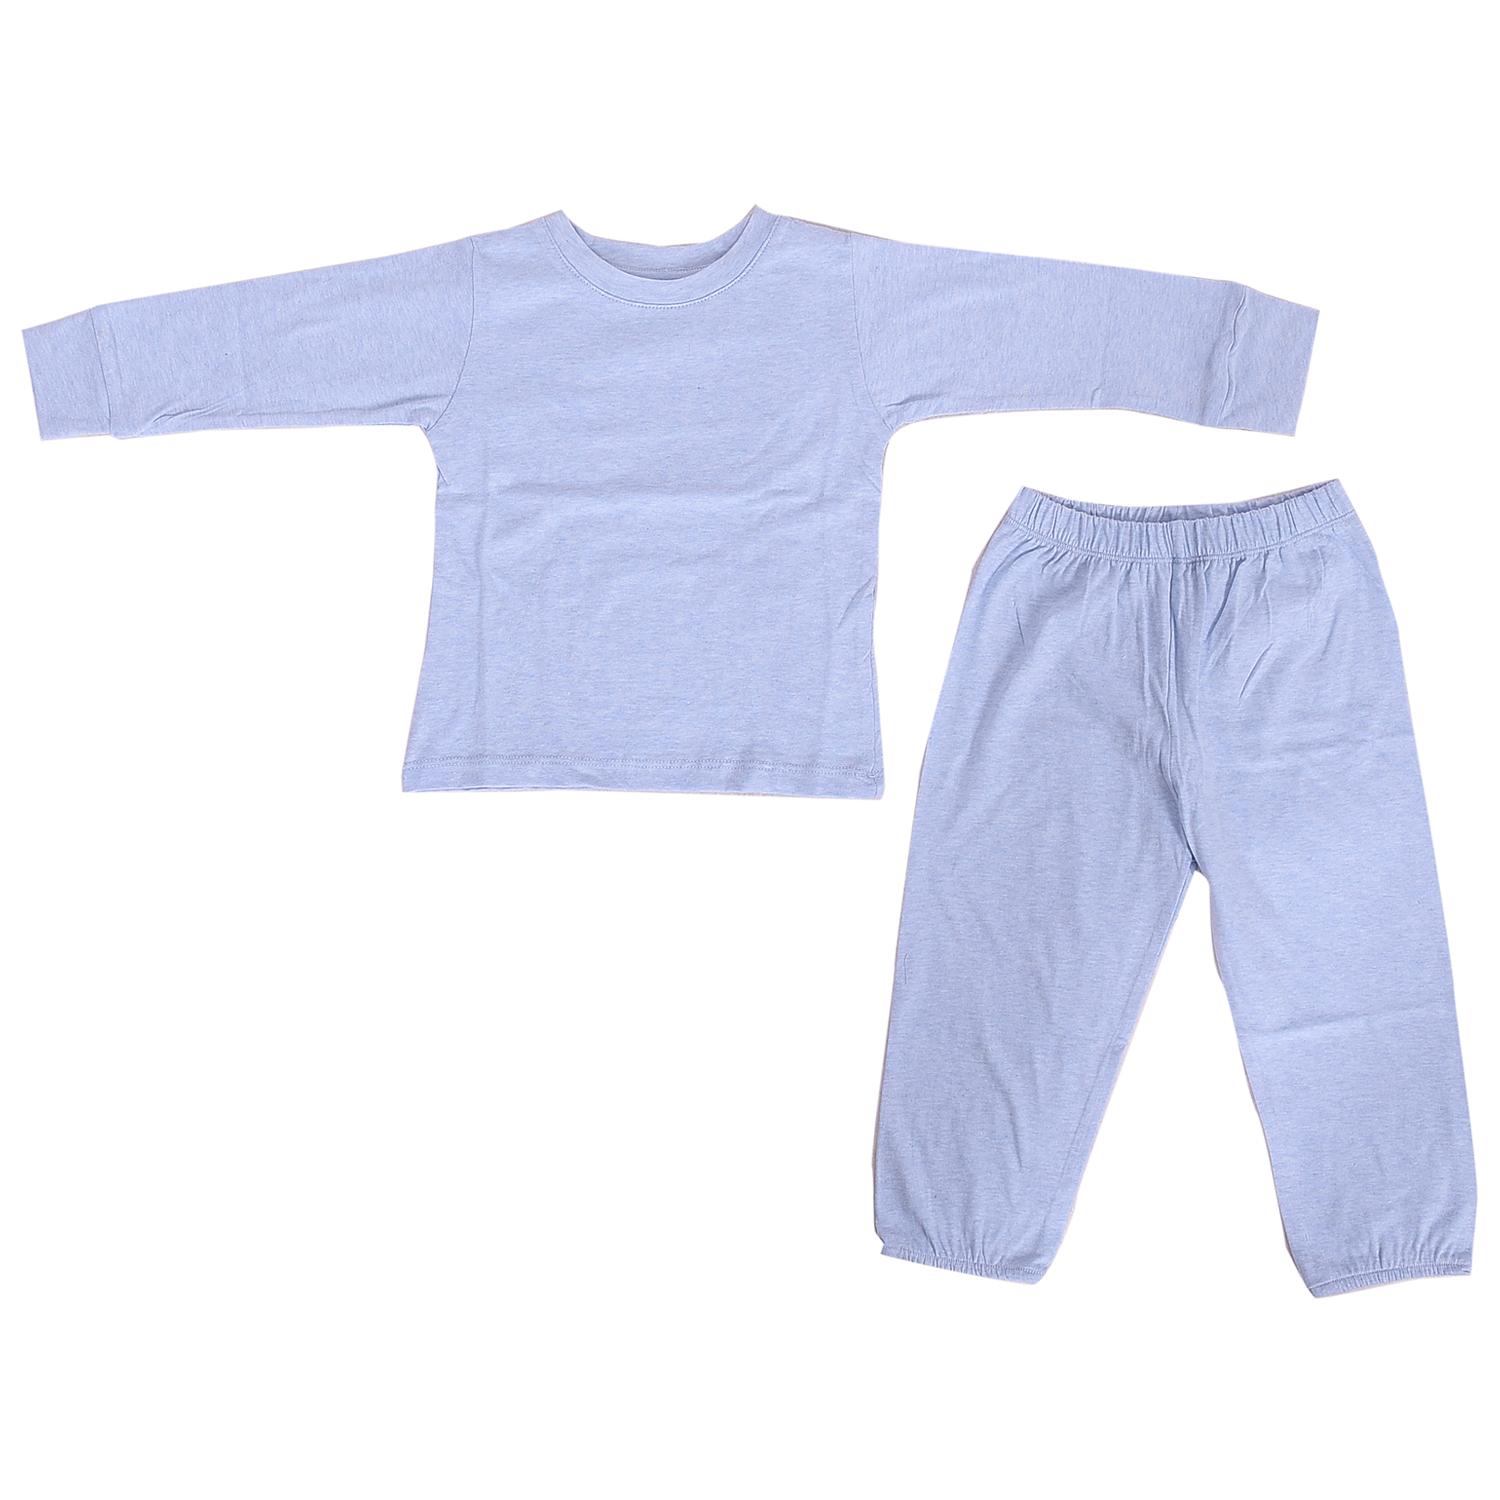 Baby Full sleeve, Full sleeve Tshirt, 1 Pajama Pants - Blue, Set - 1